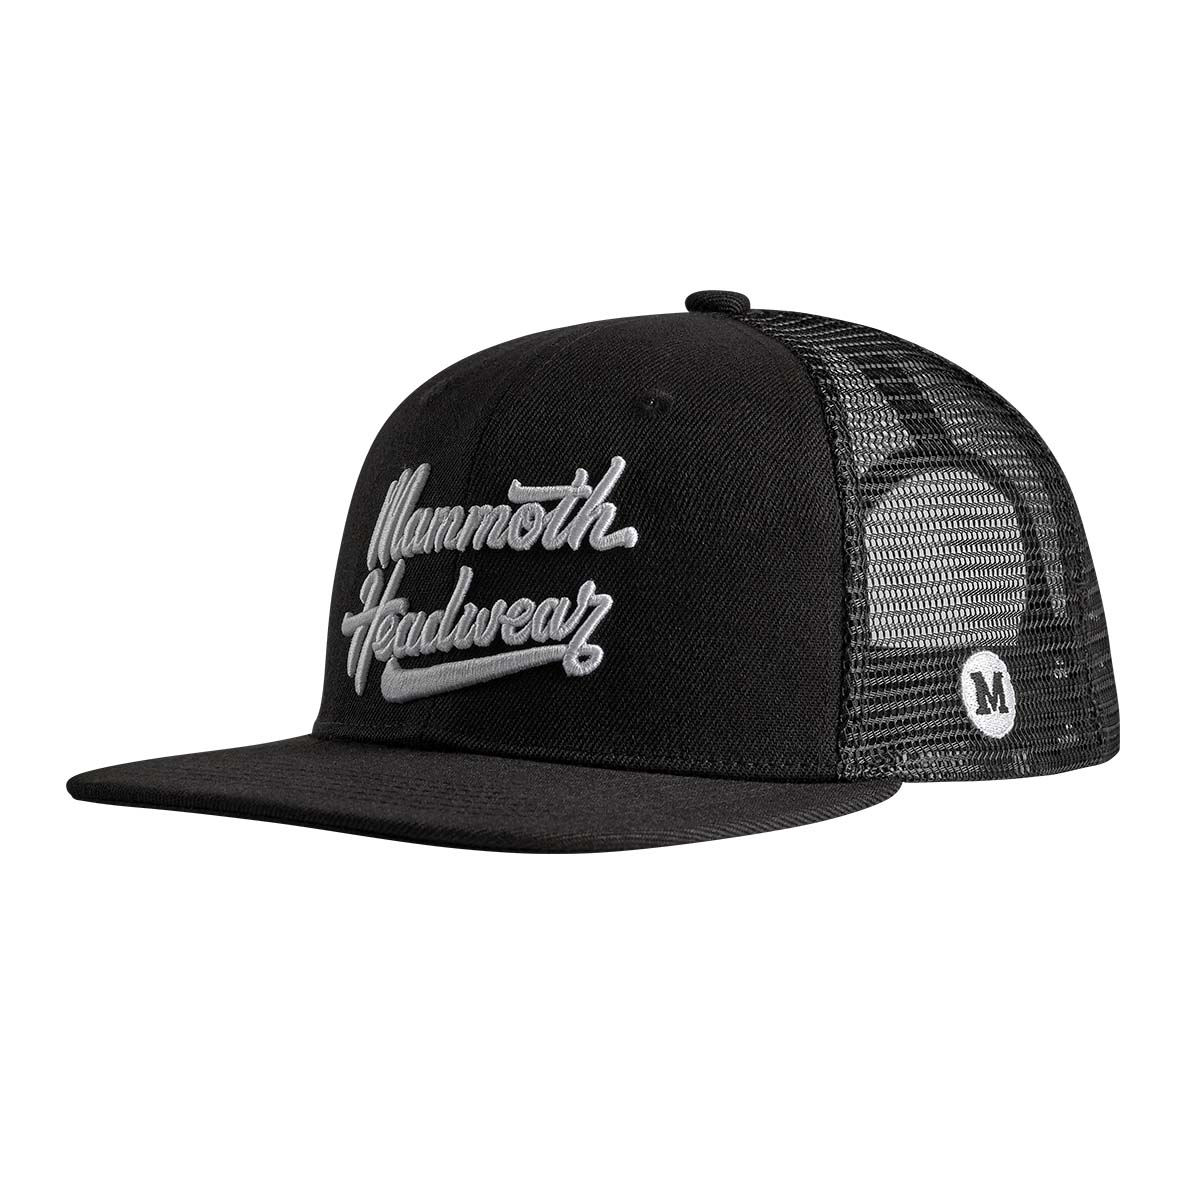 Mammoth Script Snapback Black Hat - Shop Now